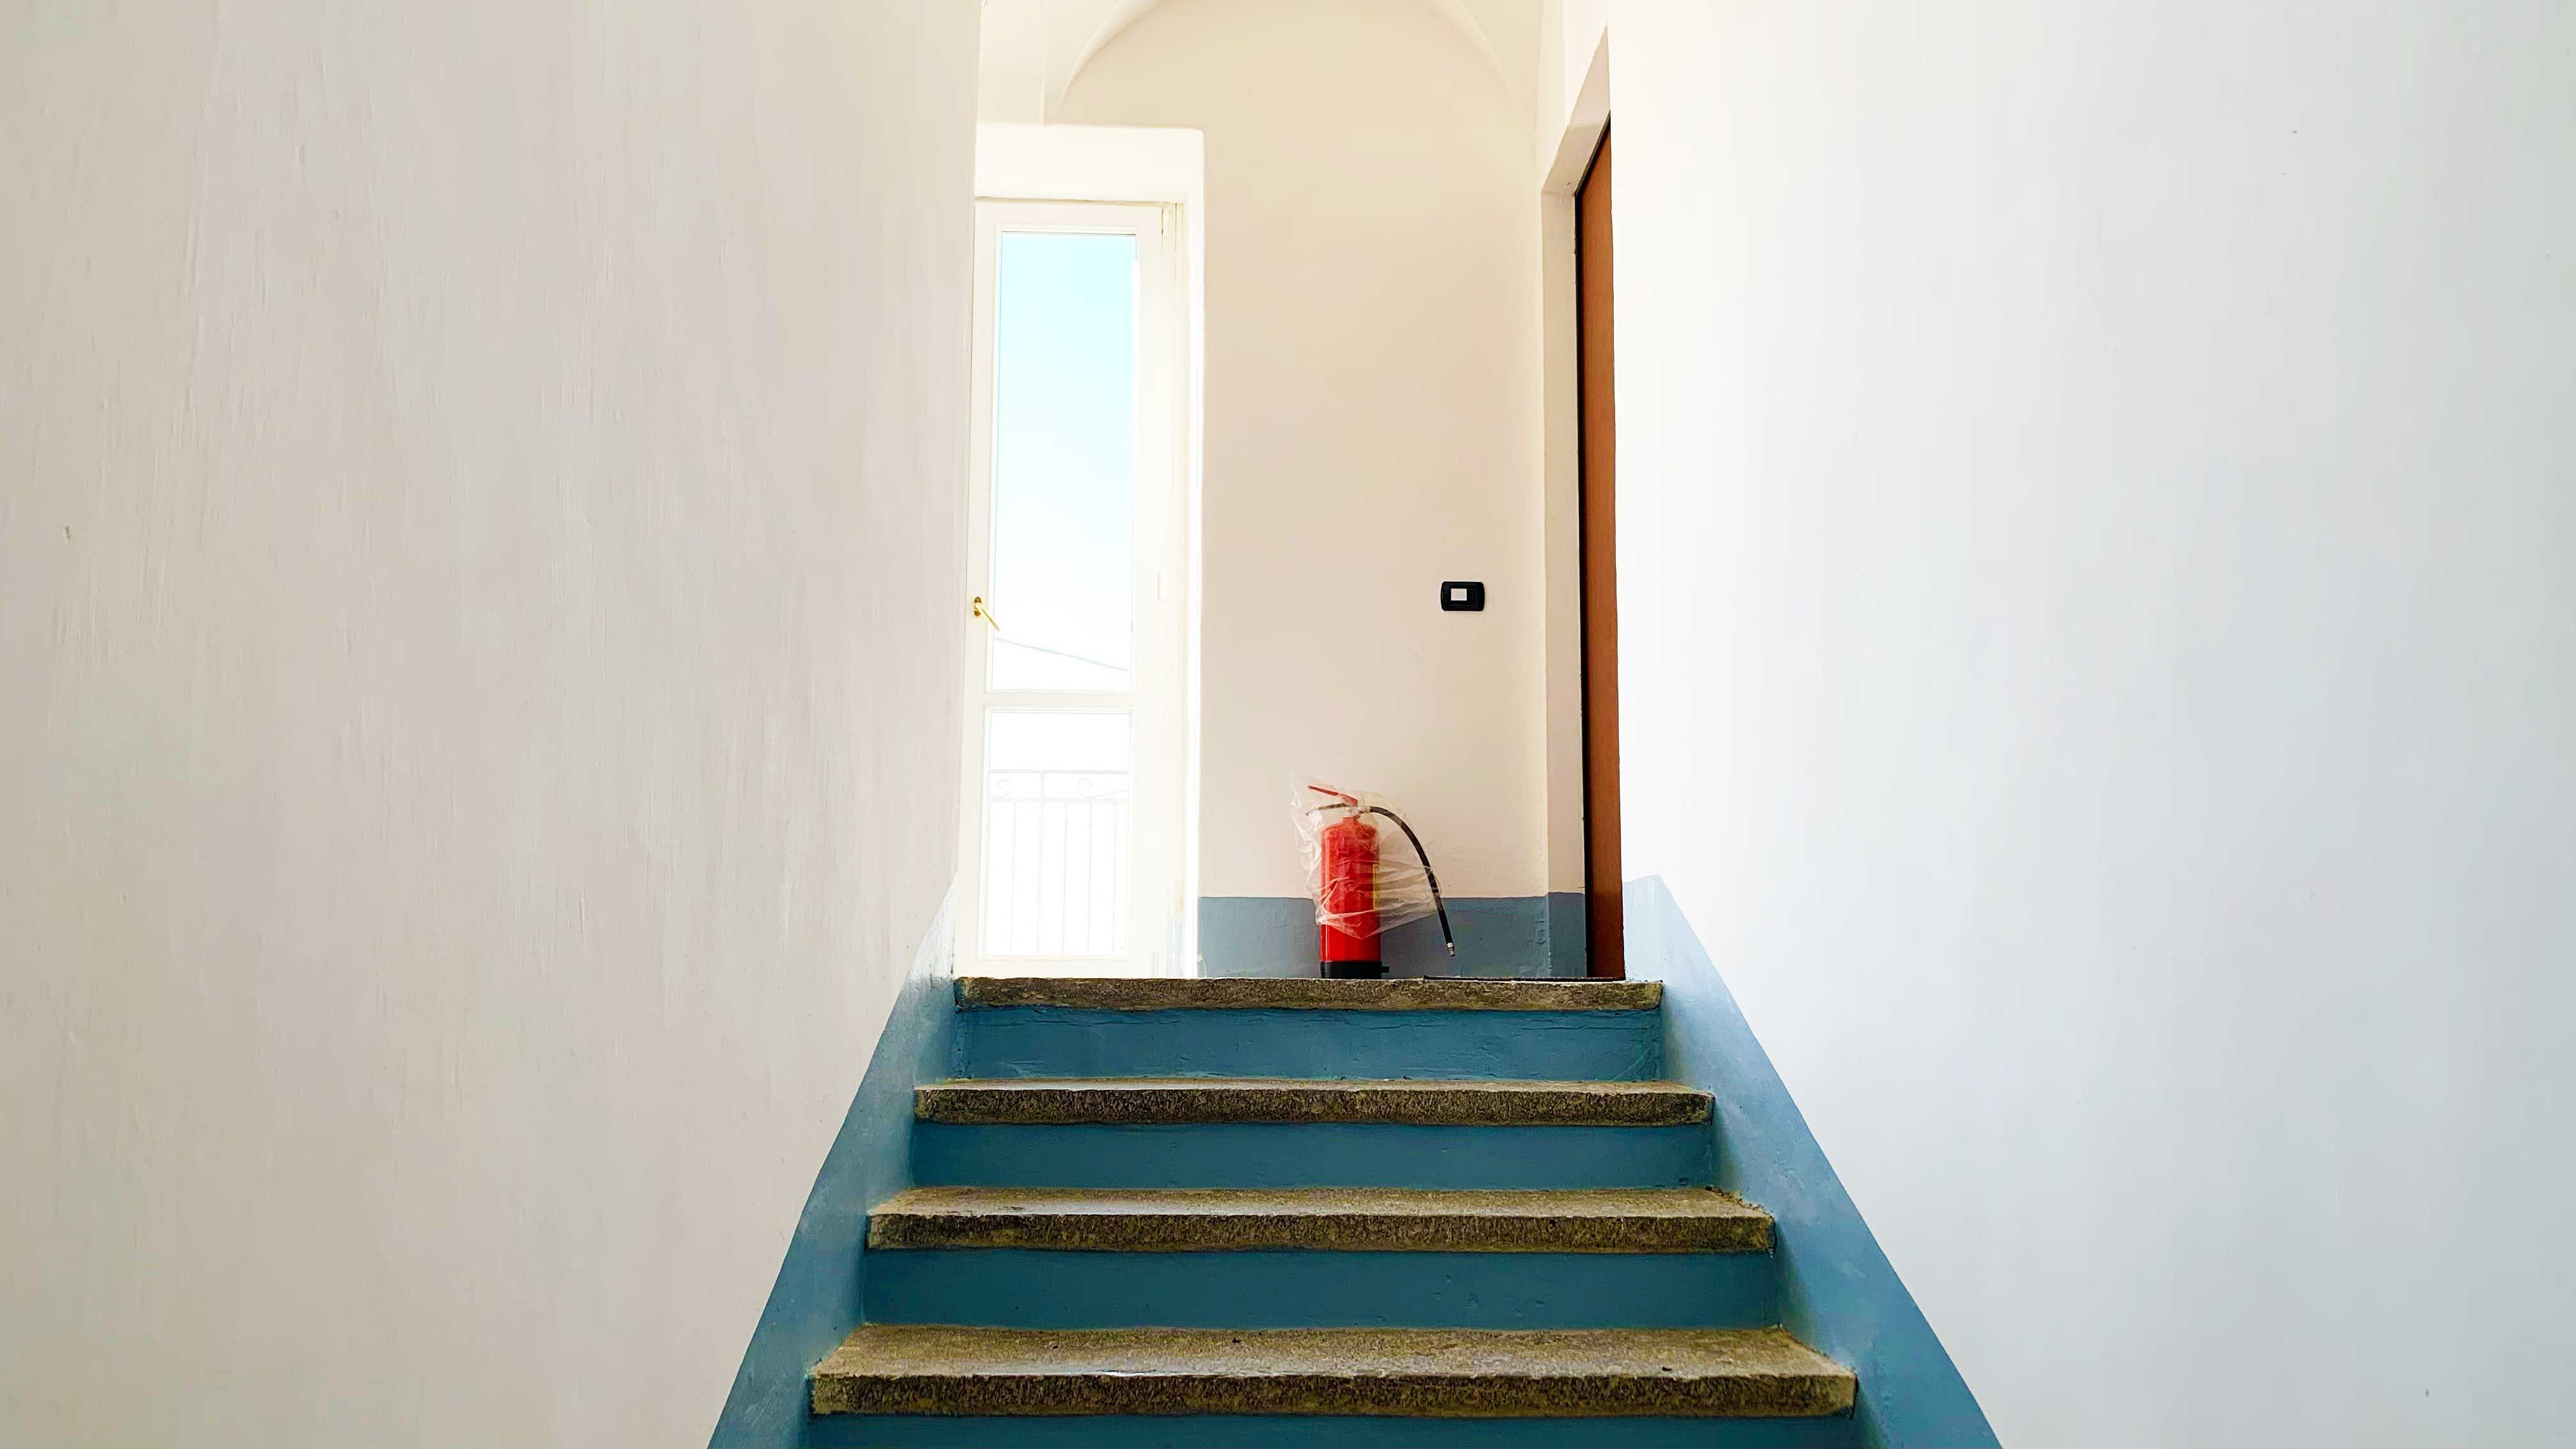 JWguest Apartment at Pianillo, Campania | Residence "Alma" on the Amalfi Coast | Jwbnb no brobnb 25